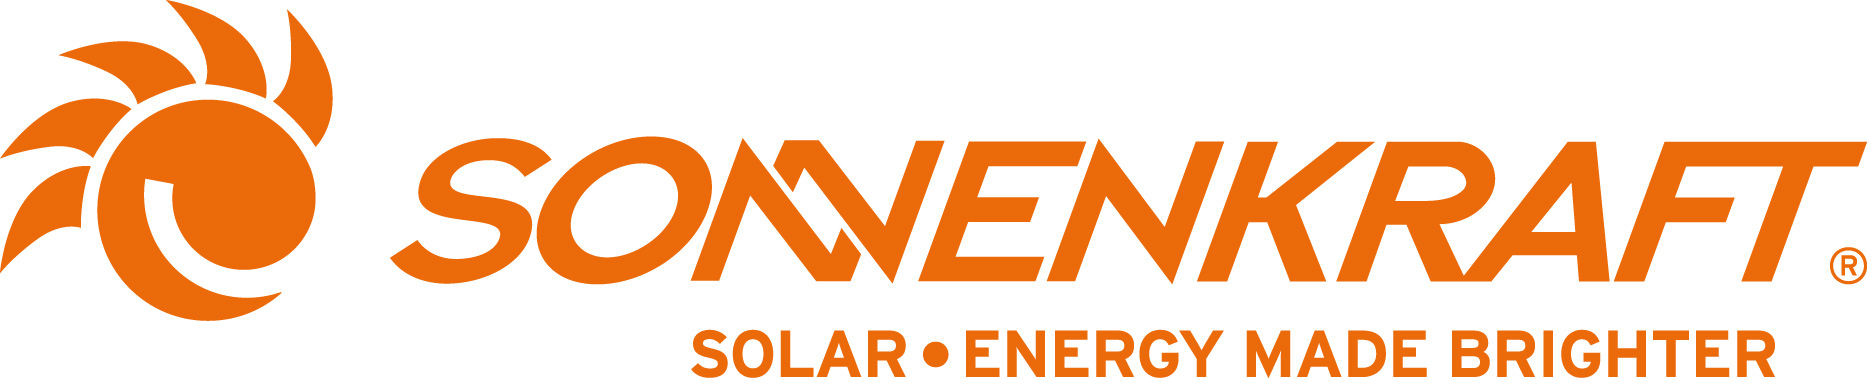 Sonnenkraft logo